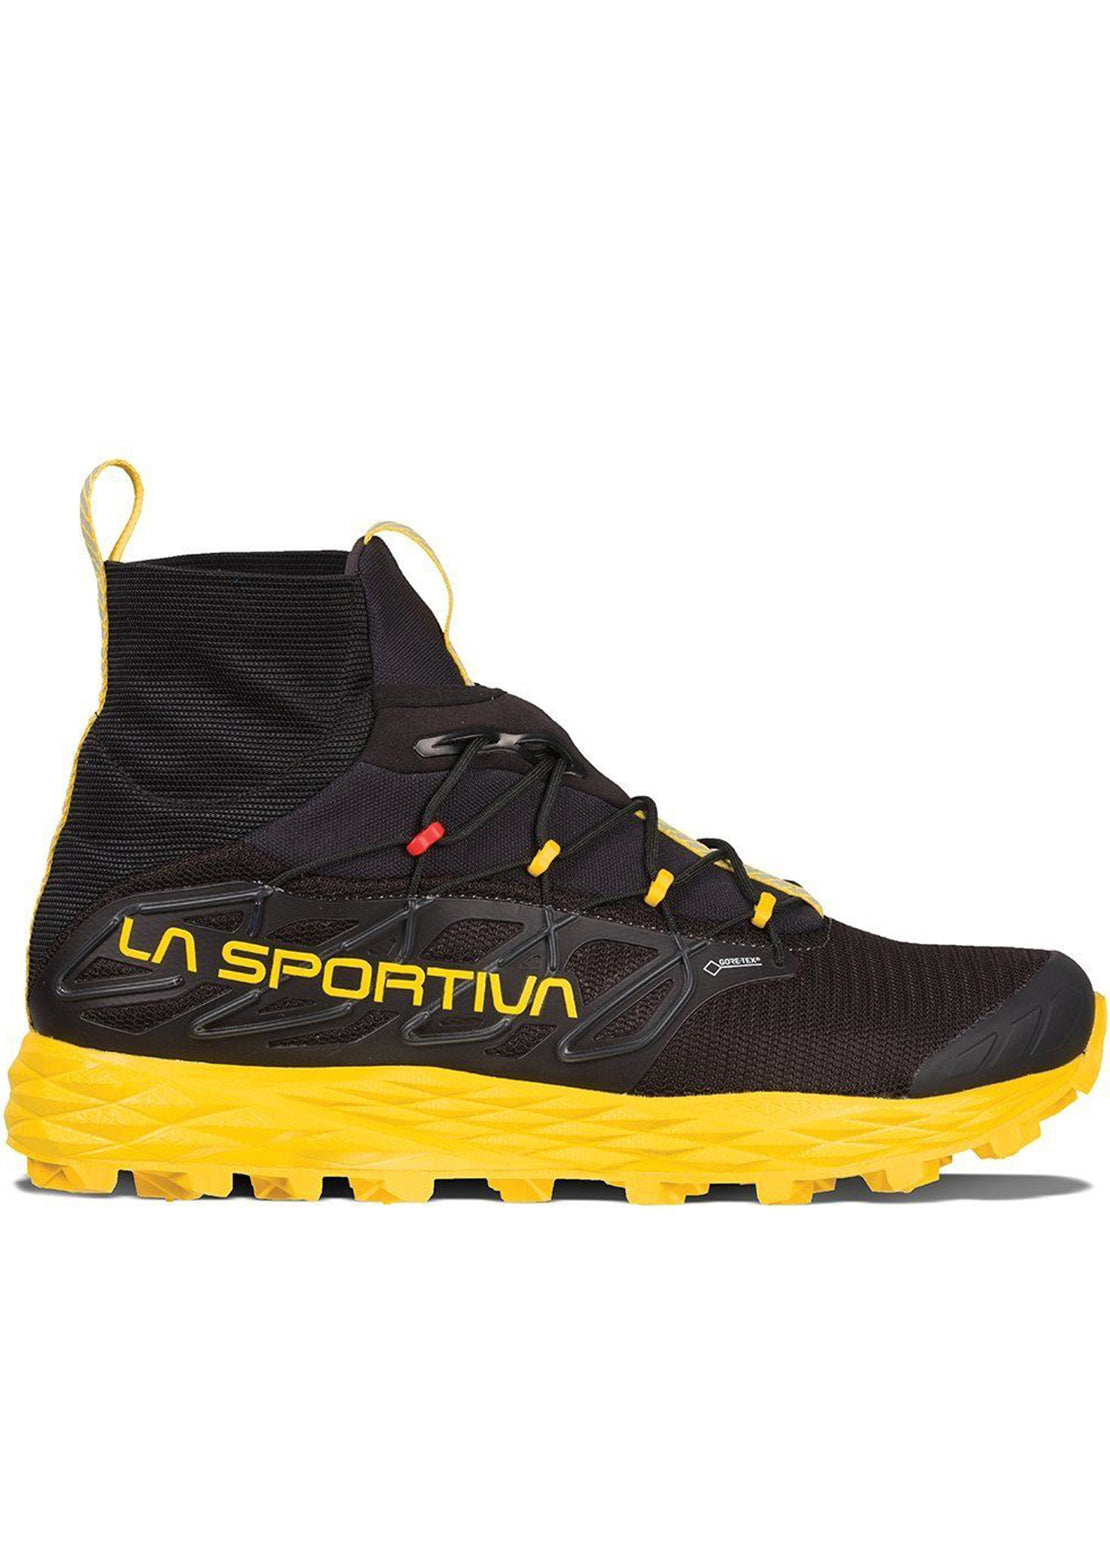 La Sportiva Unisex Blizzard GTX Winter Running Shoes Black/Yellow